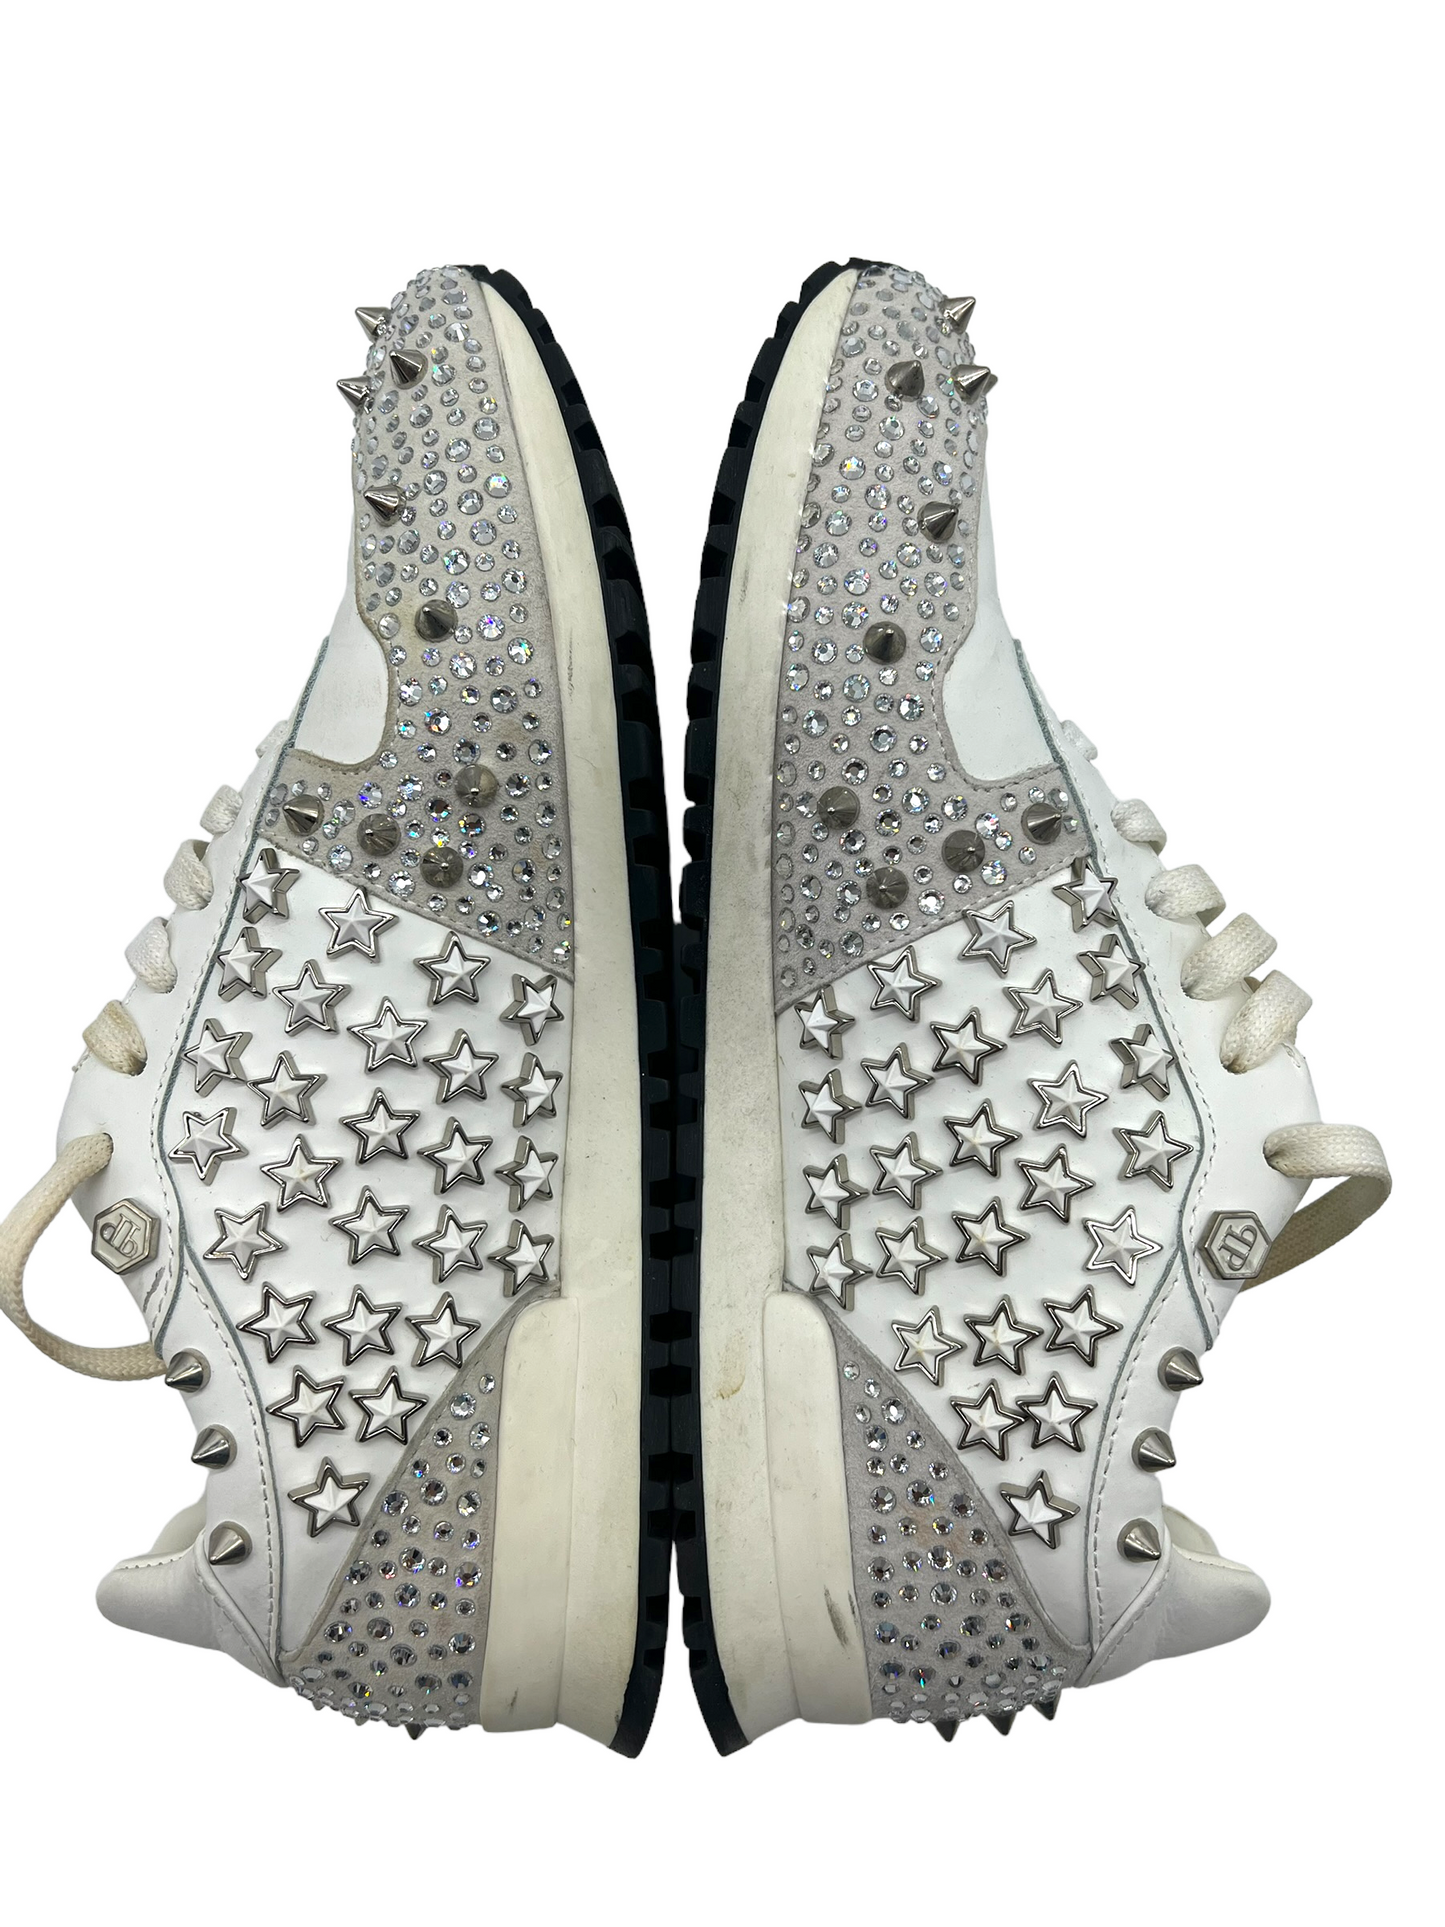 Philipp Plein Legend Embellished Size 37 Sneakers